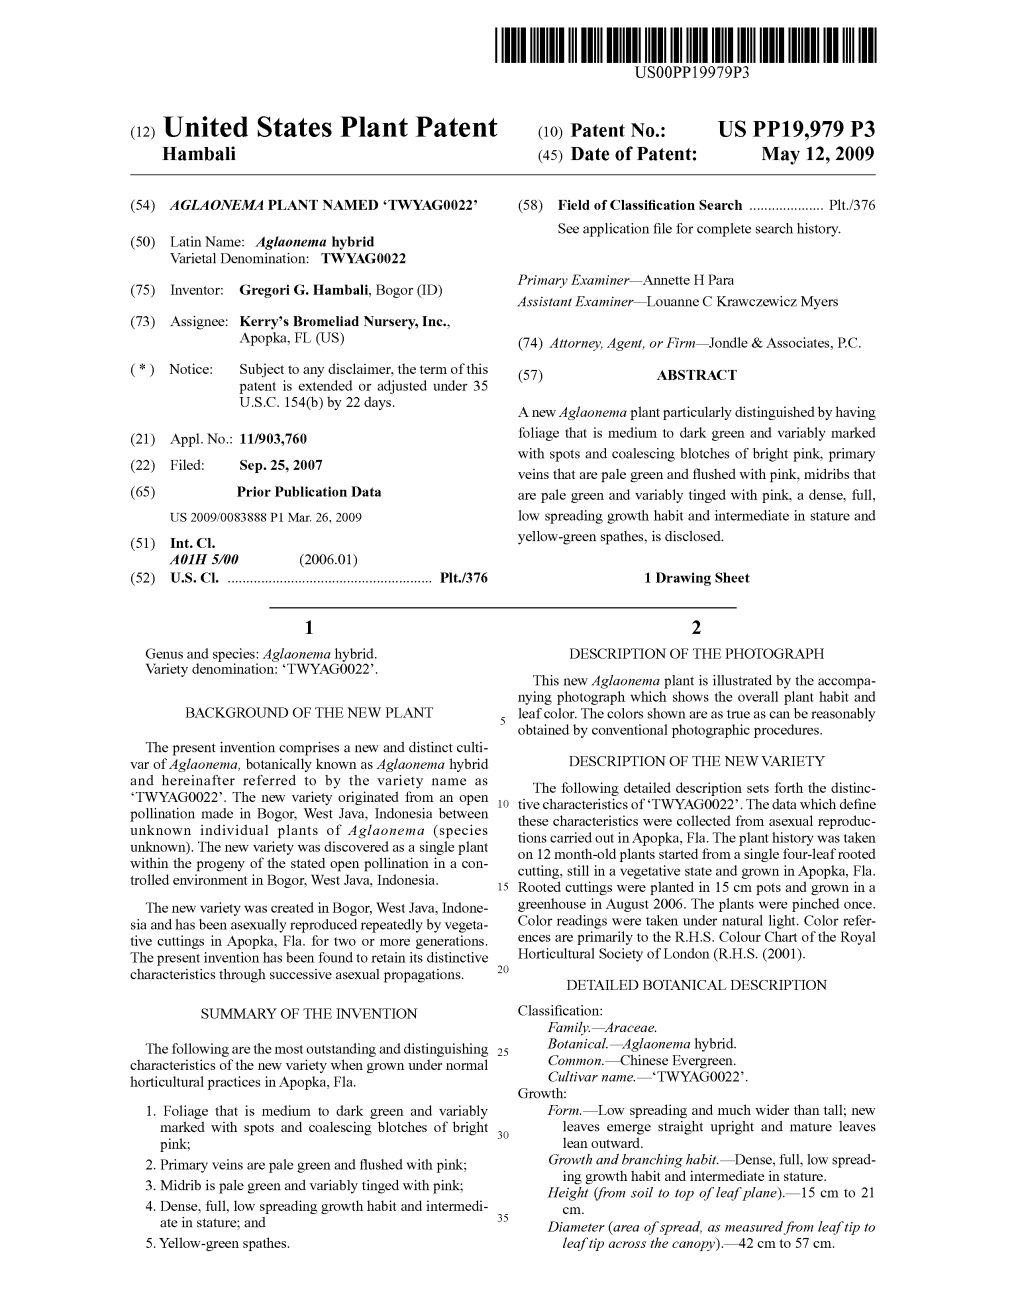 (12) United States Plant Patent (10) Patent No.: US PP19,979 P3 Hambali (45) Date of Patent: May 12, 2009